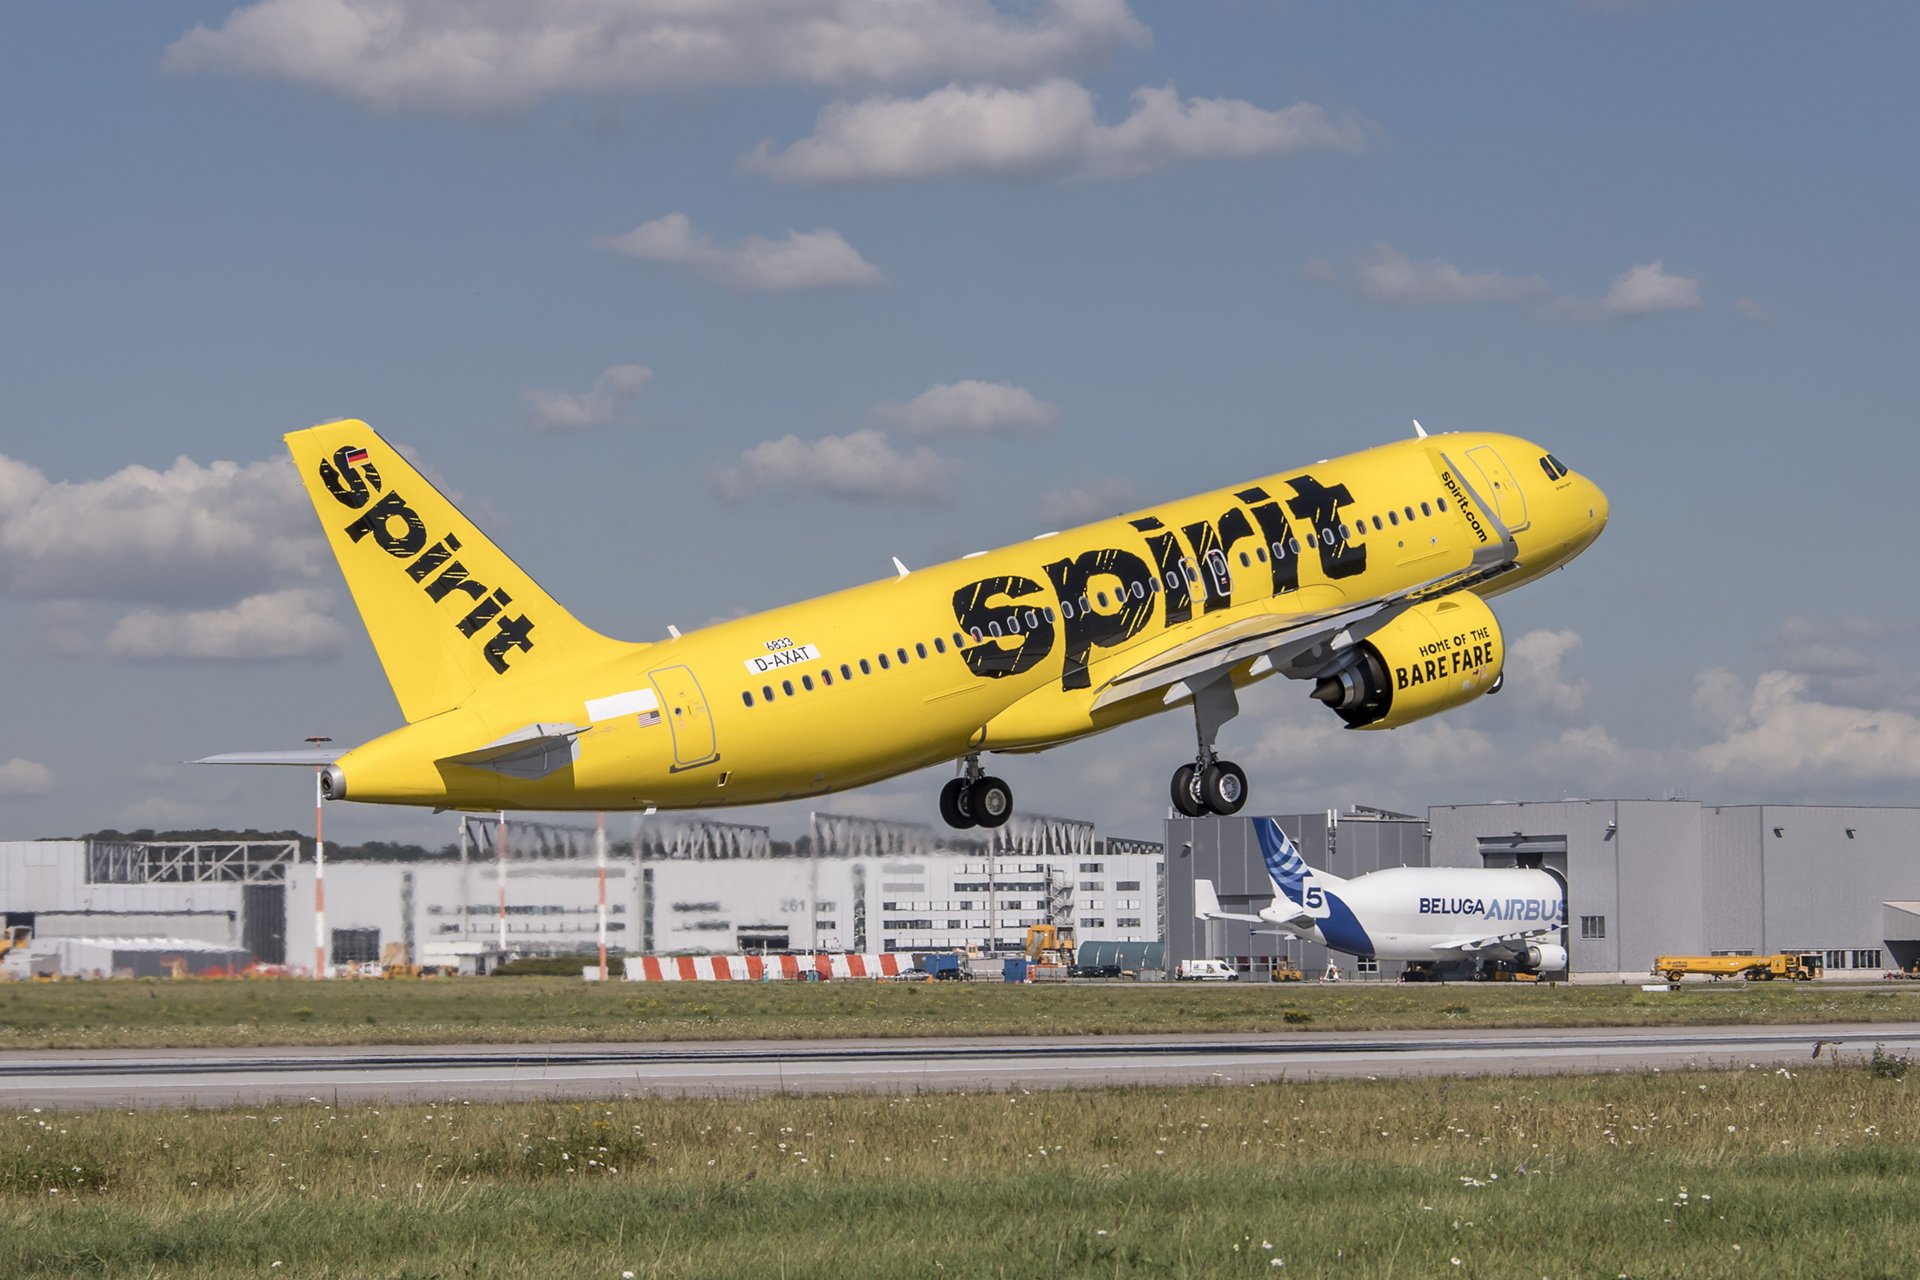 Good news! Spirit Airlines to resume hiring pilots and flight attendants